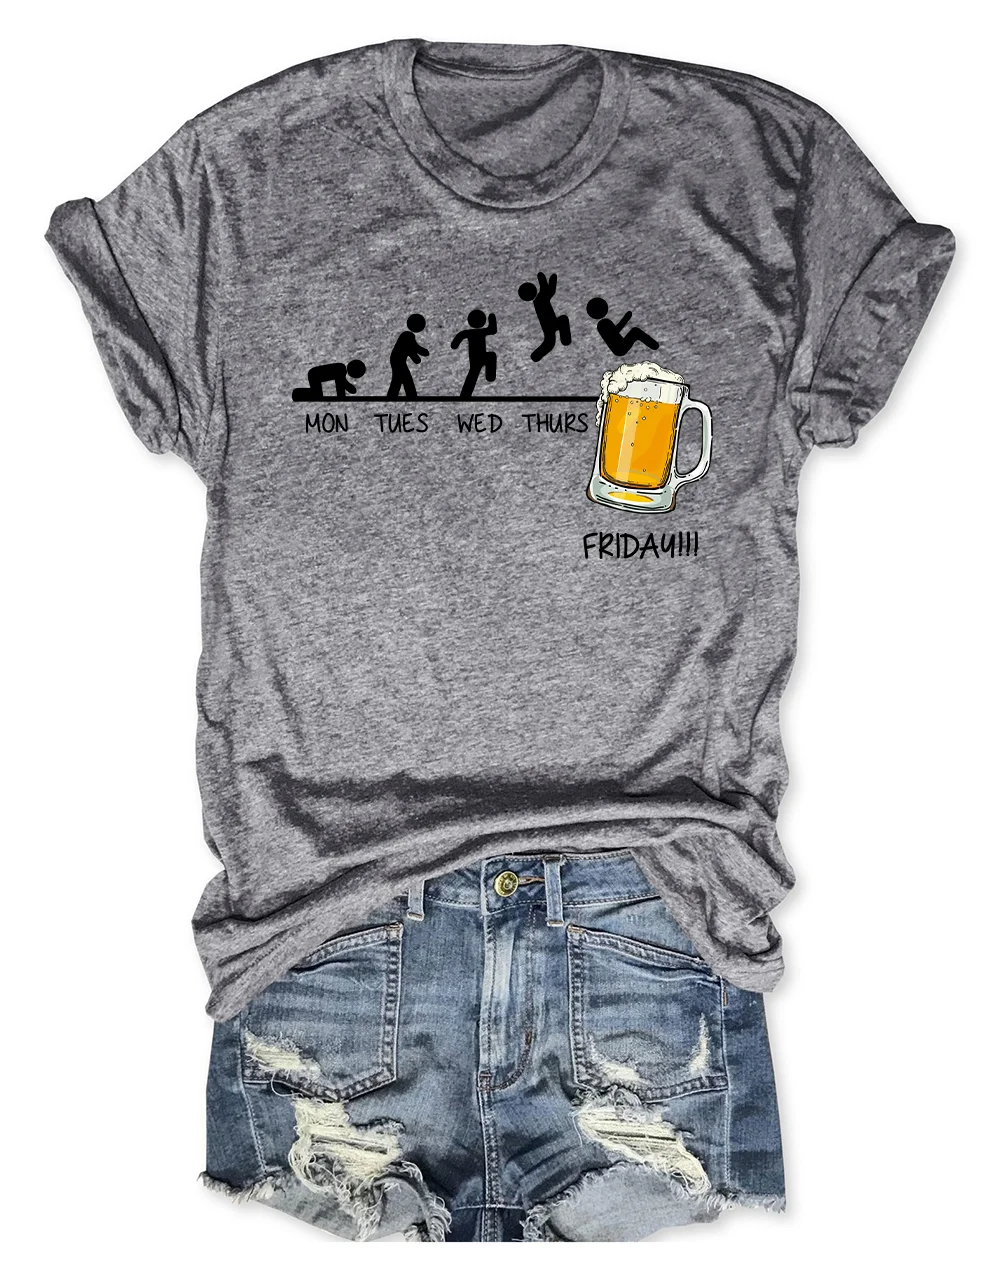 Craft Beer T-Shirt